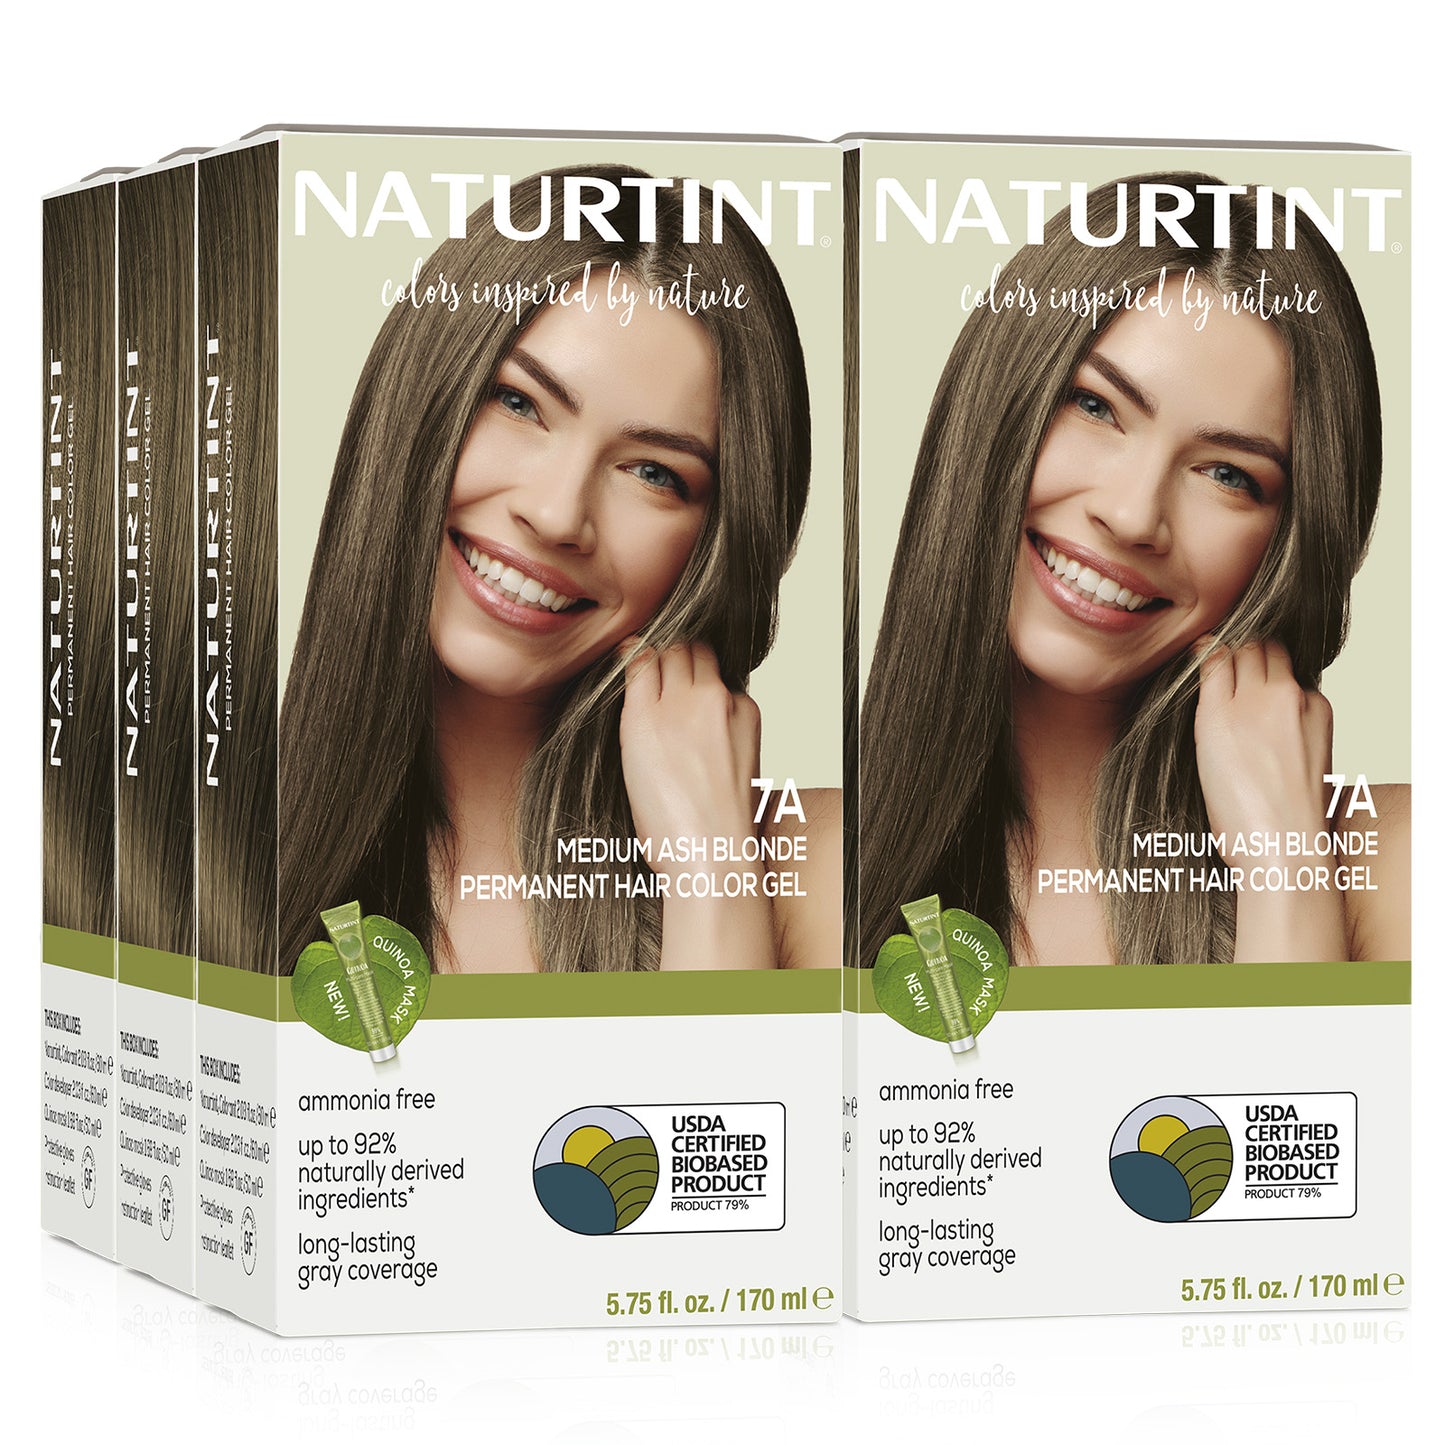 Naturtint Permanent Hair Color 7A Medium Ash Blonde